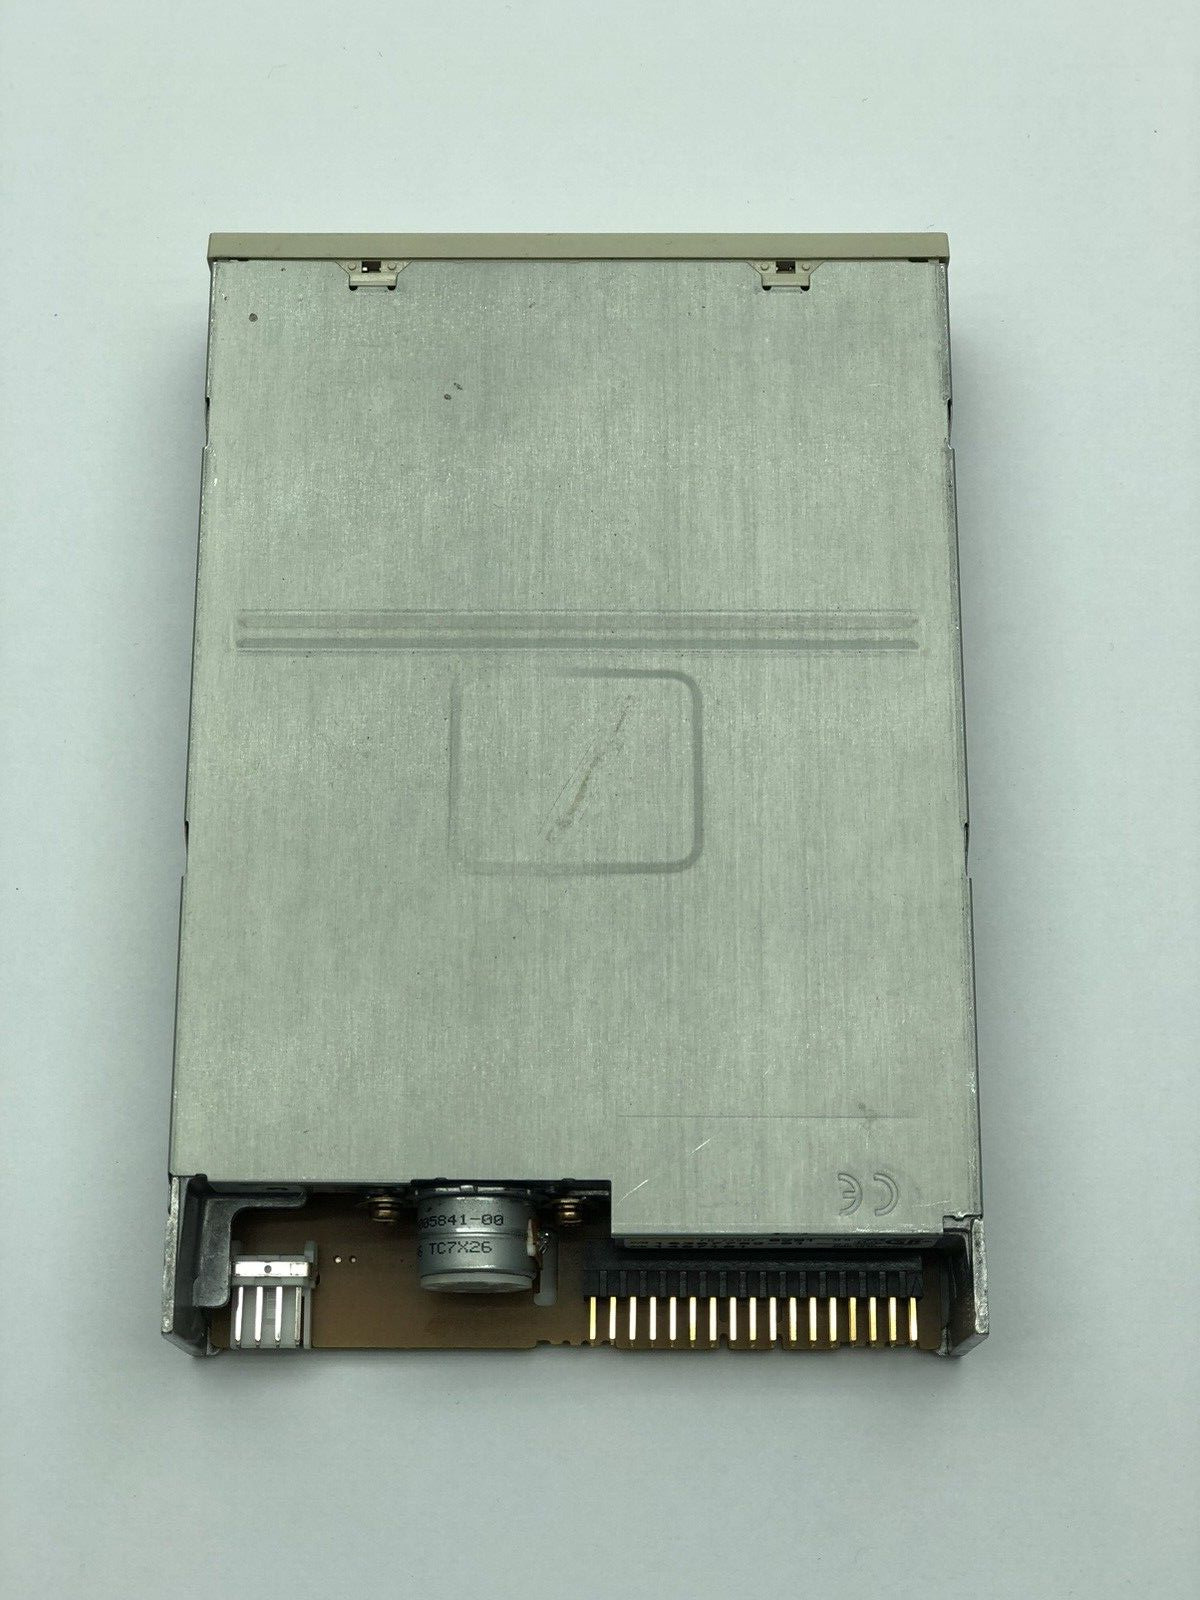 TEAC Floppy Drive FD-235HF C891-U5 193077C8-91